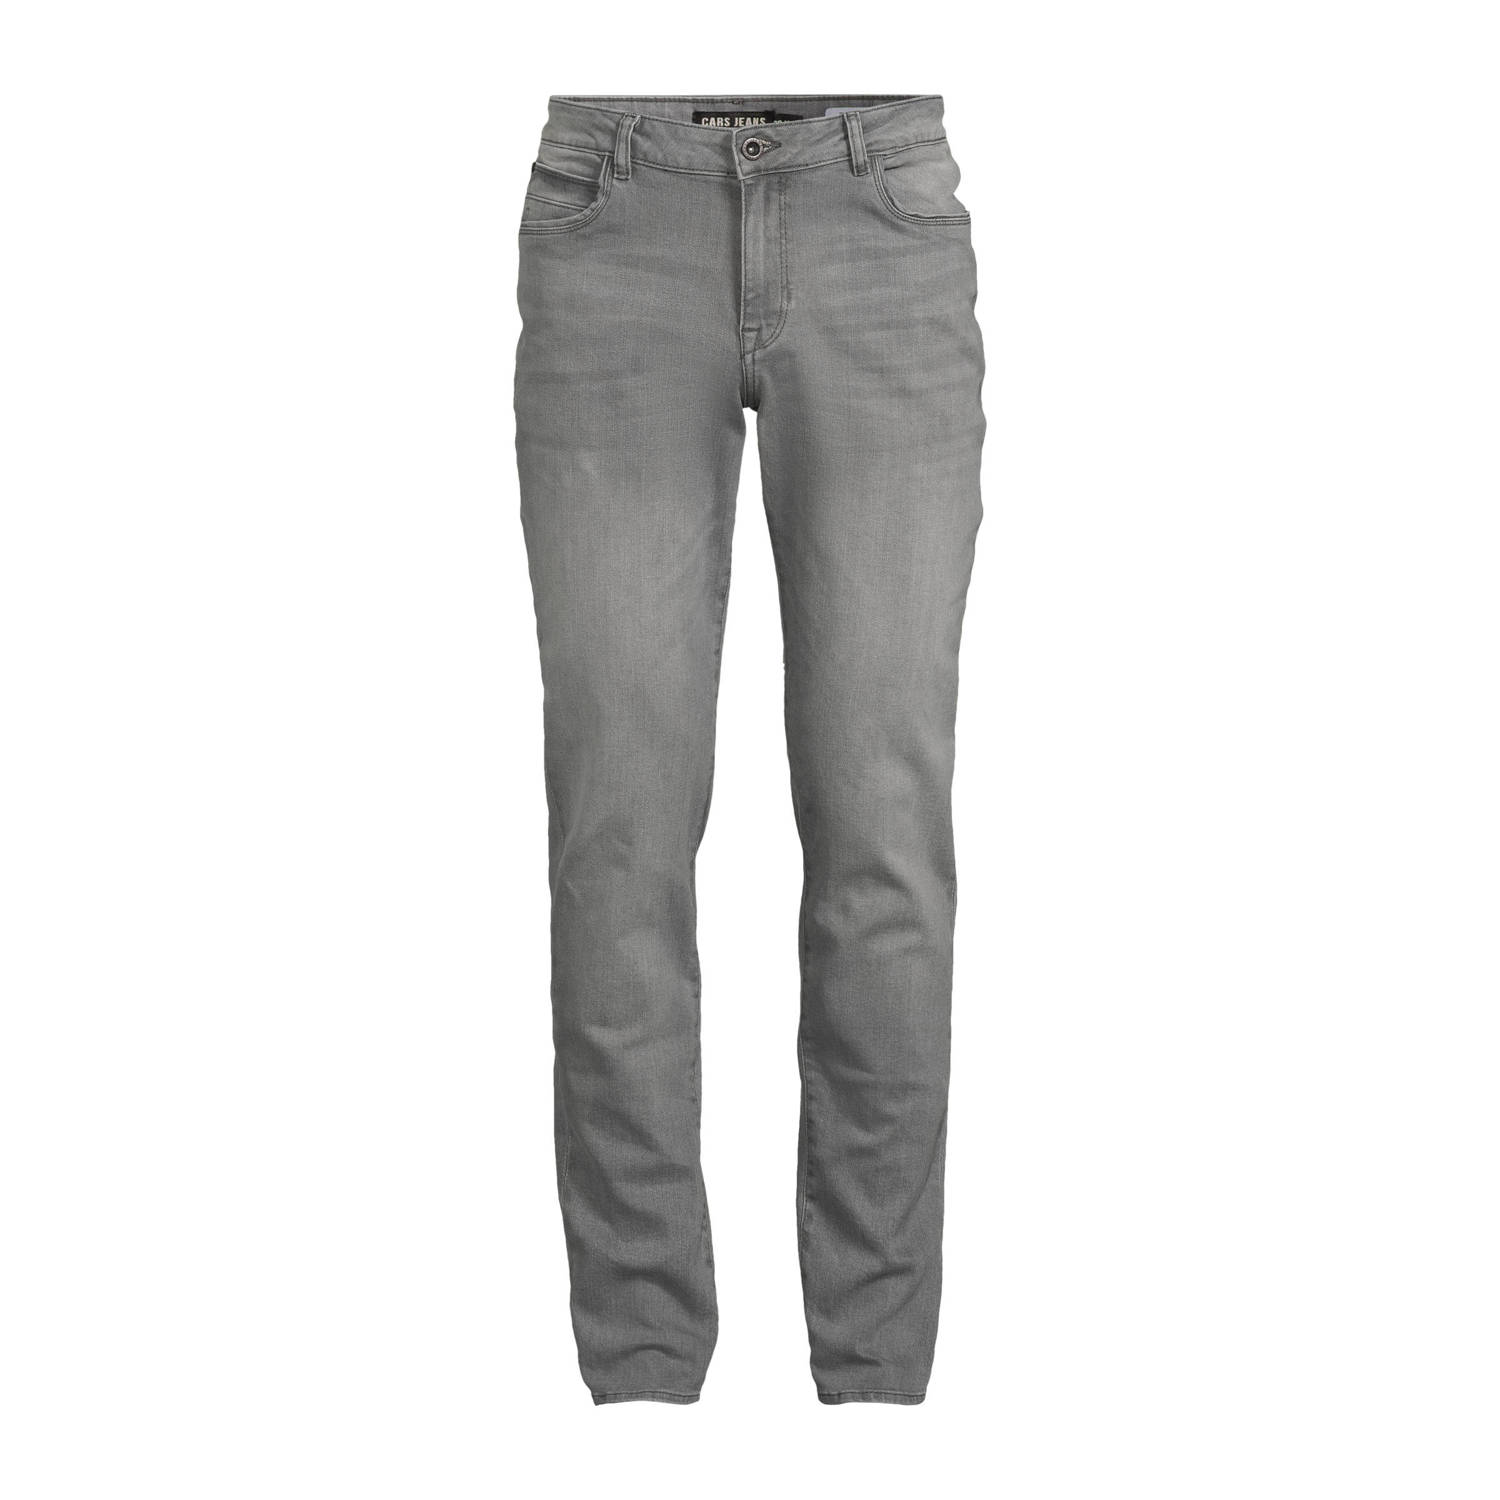 Cars slim fit jeans BLAZE grey used